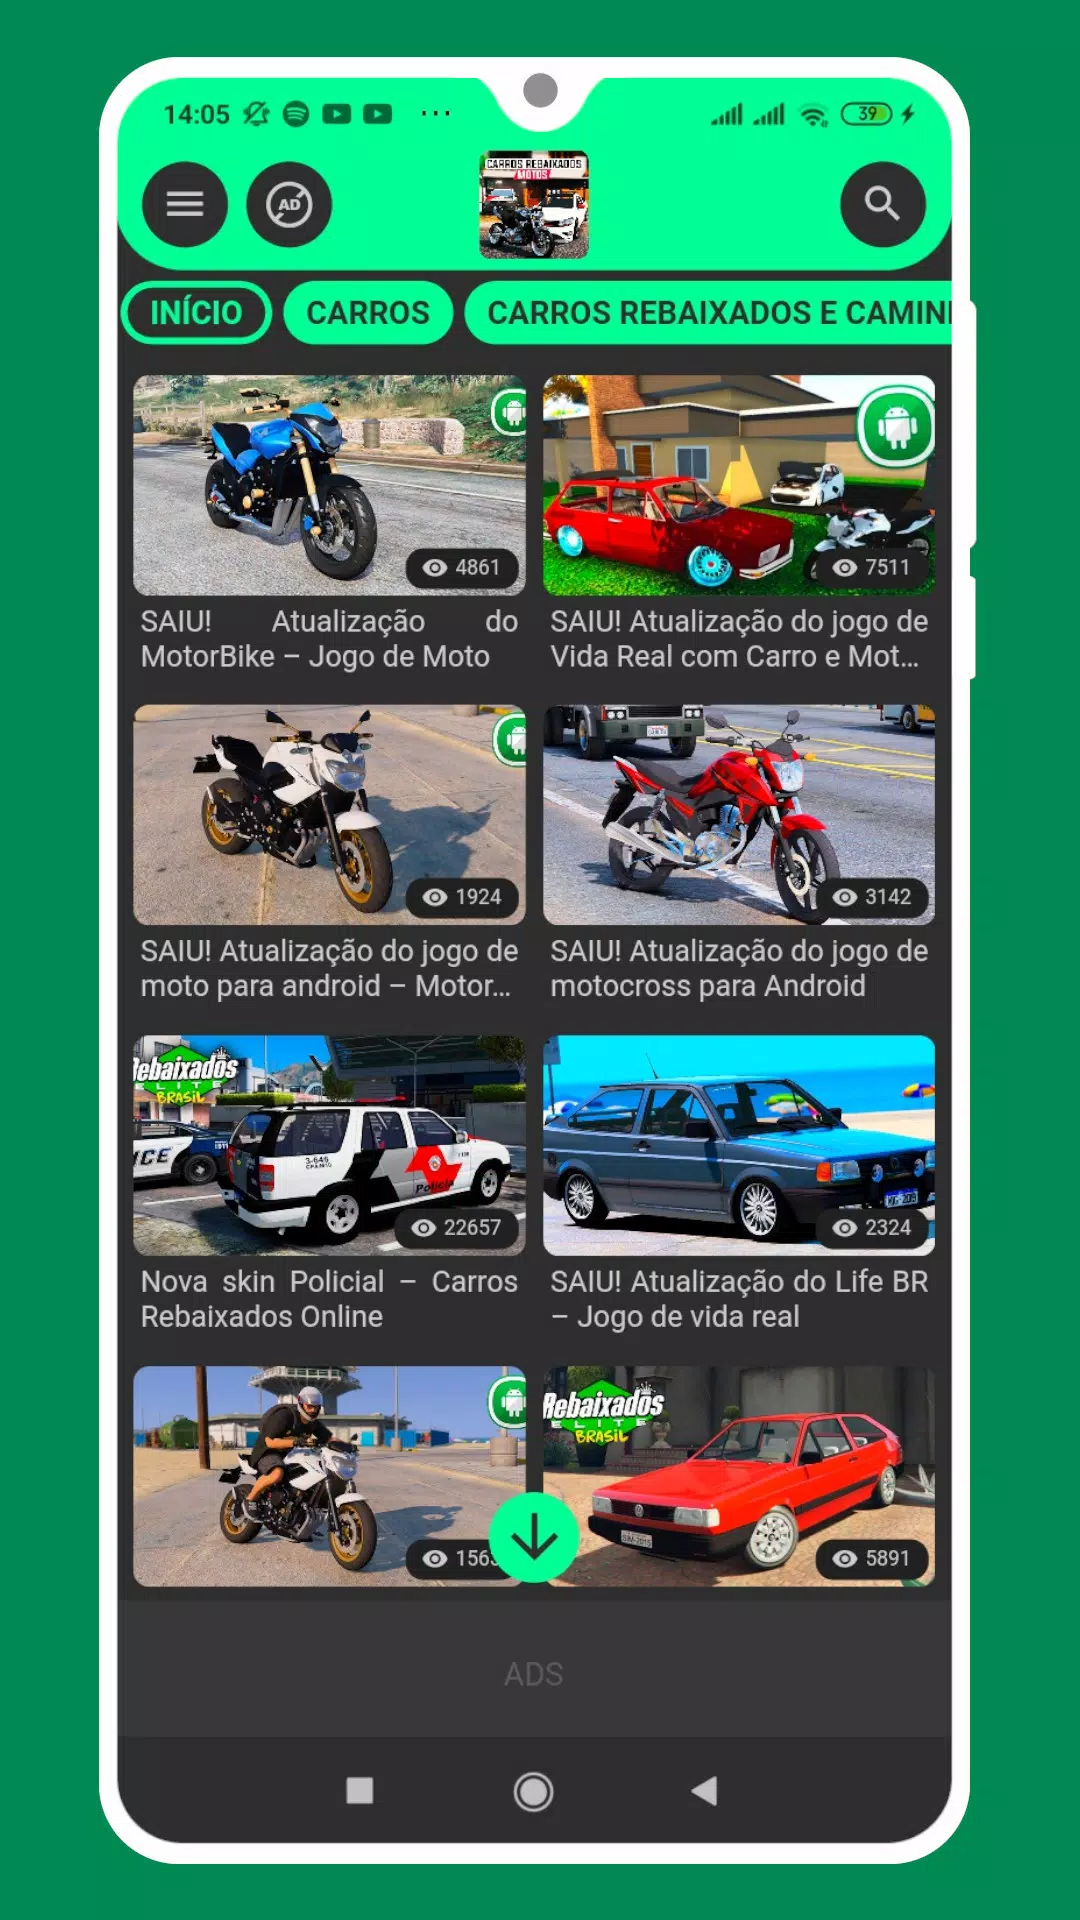 Carros Rebaixados e Motos for Android - Free App Download